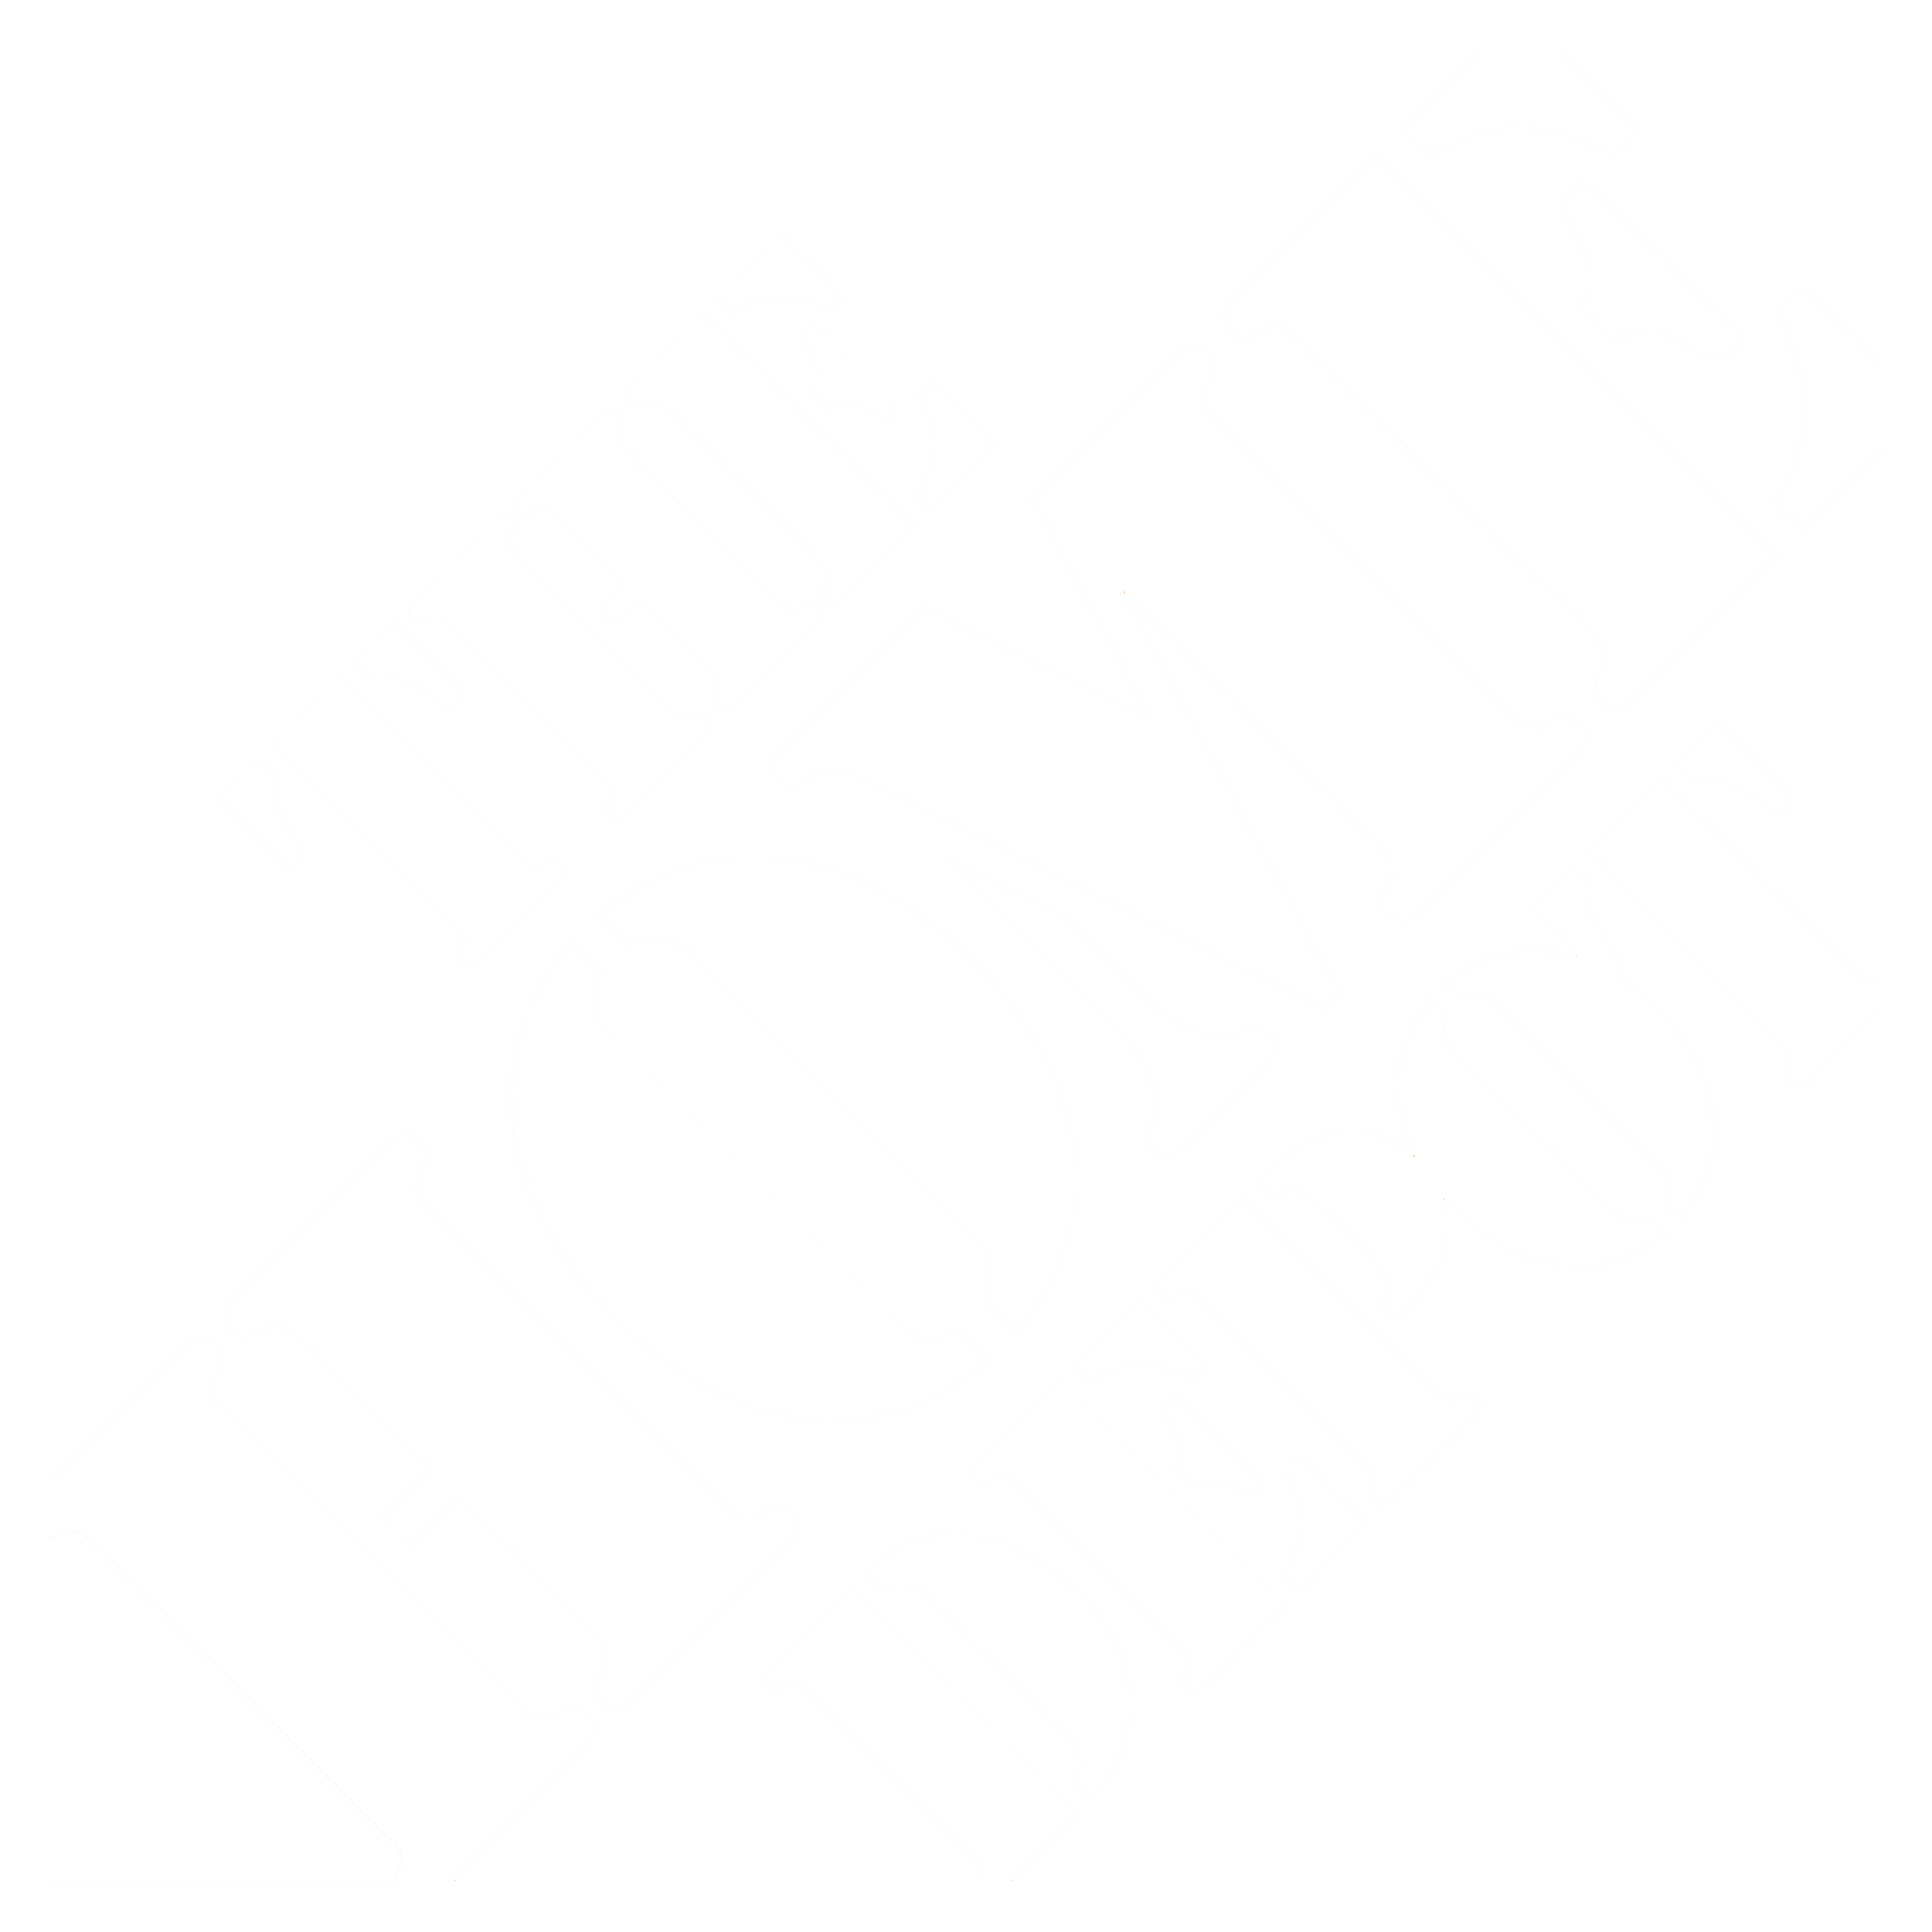 Home Depot Logo - HomeDepot White Logo PNG Image - PurePNG | Free transparent CC0 PNG ...